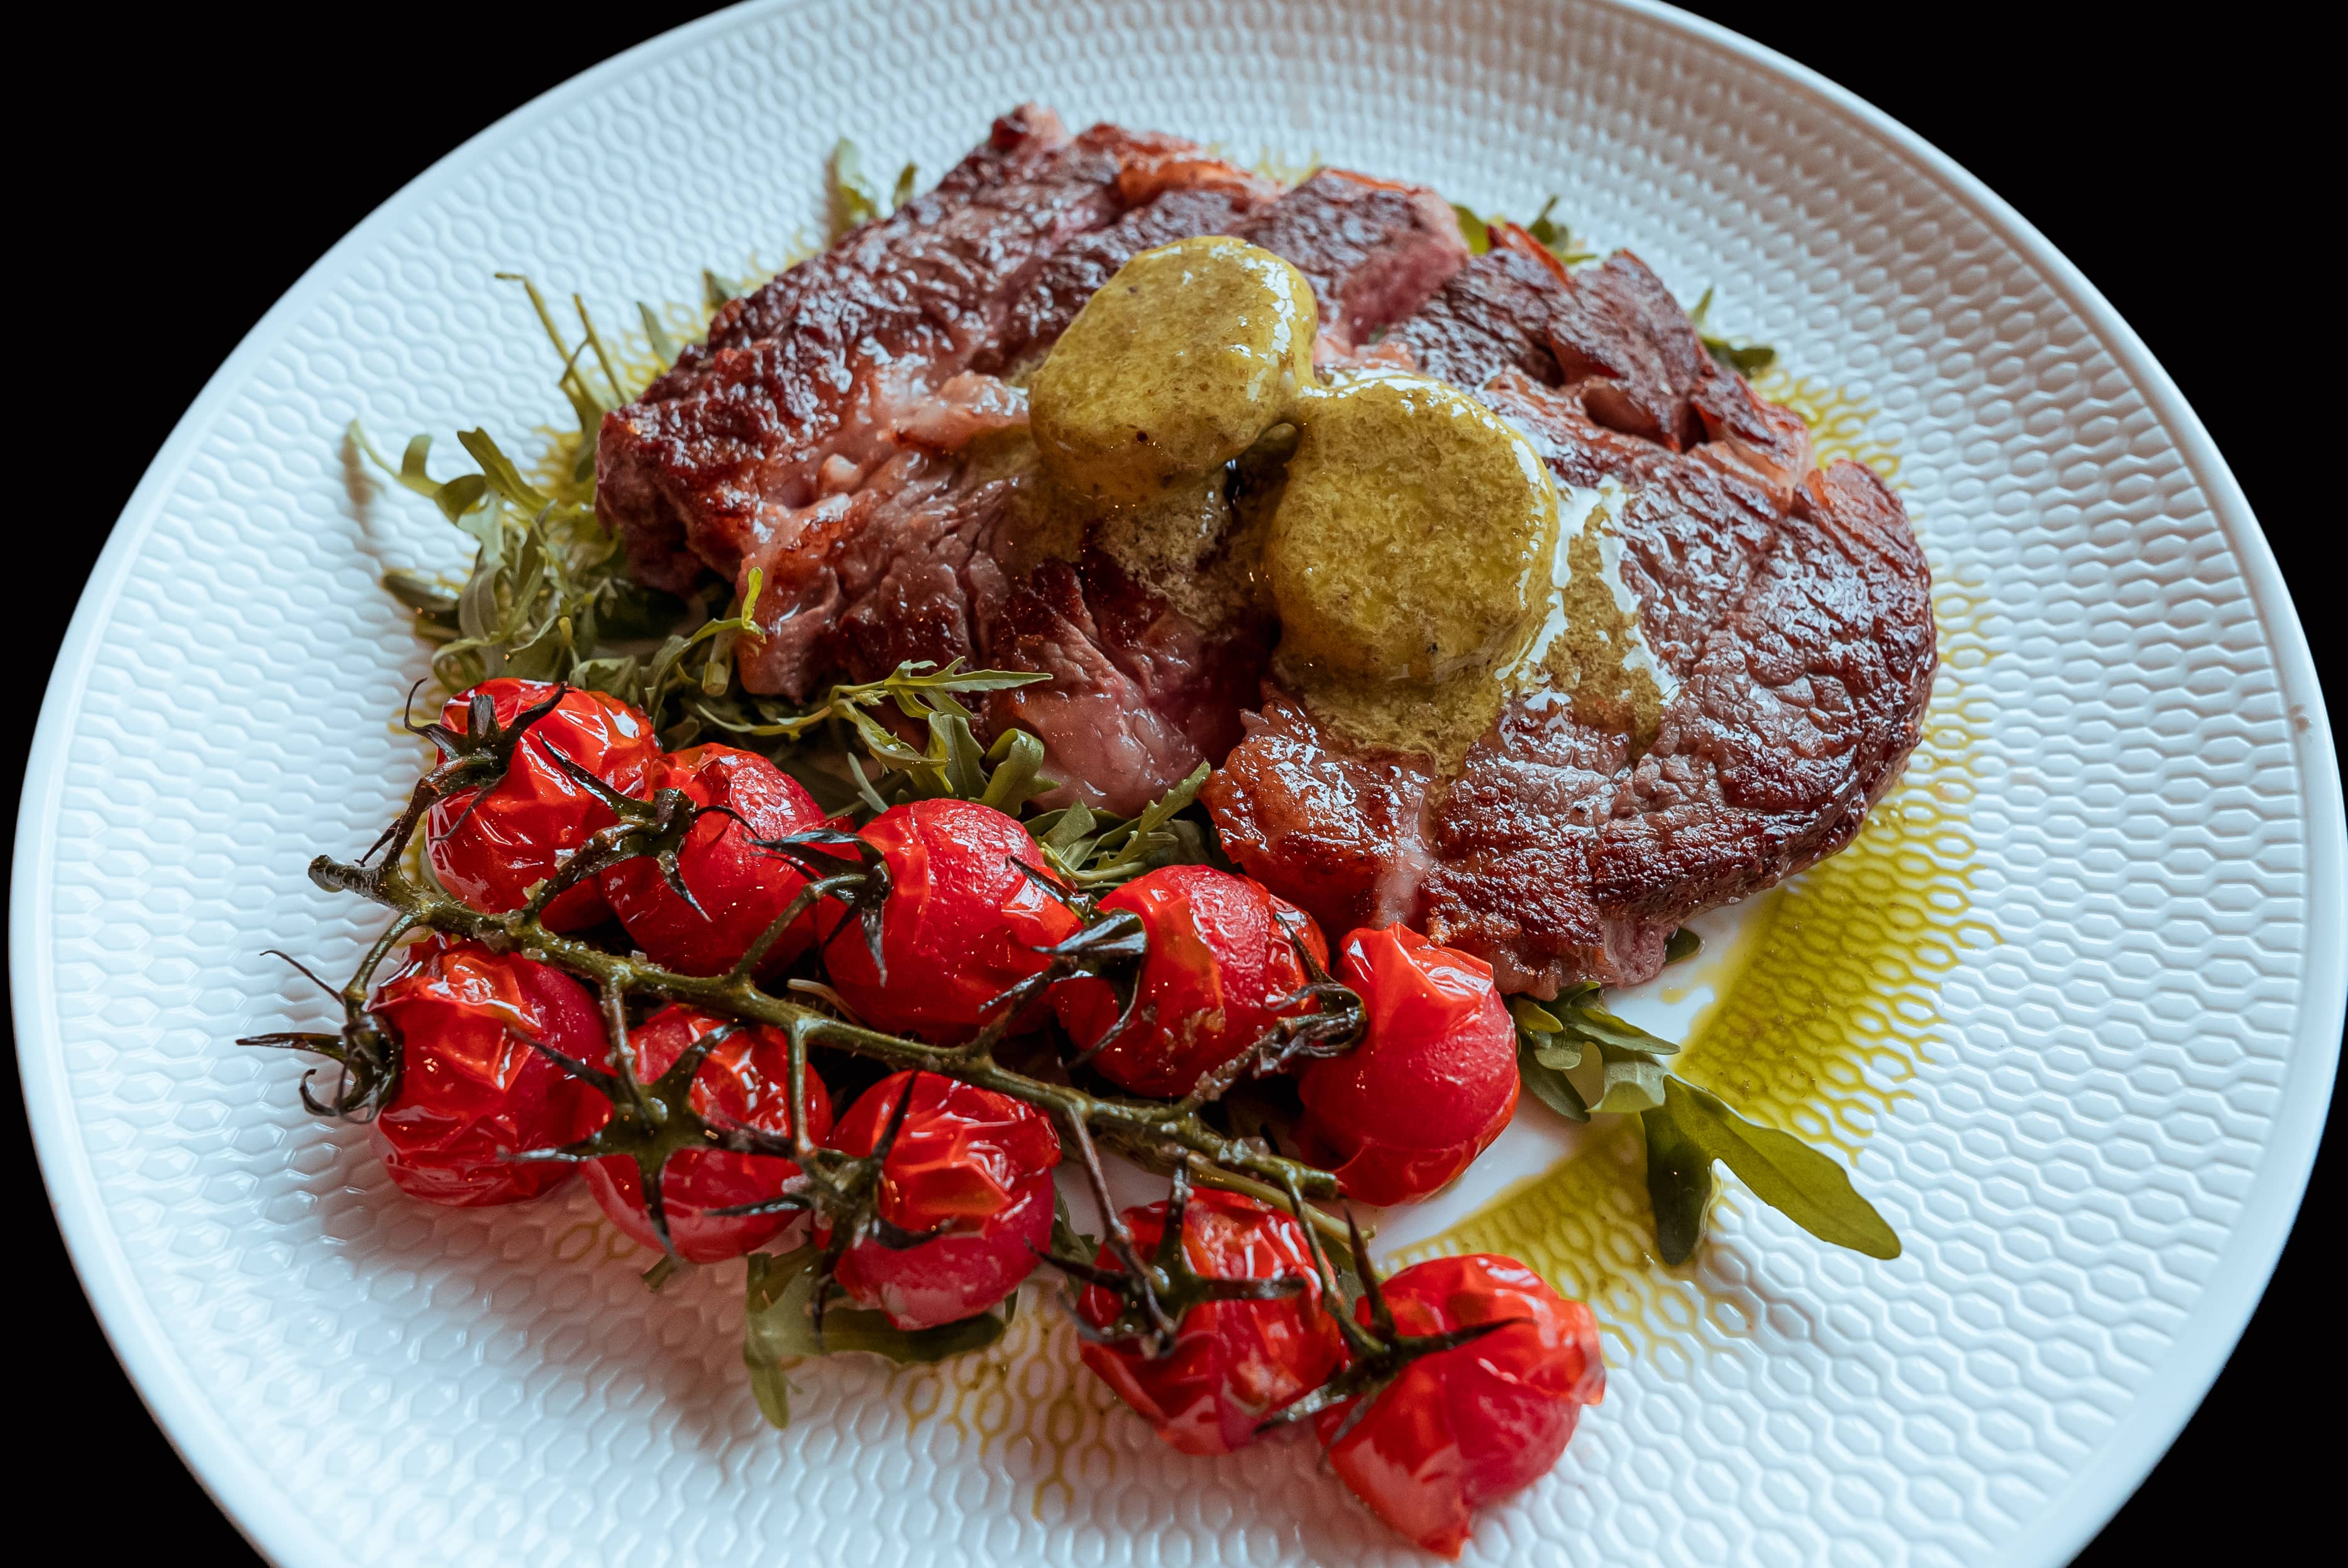 Aussie Beef Wagyu Steak with Chimichurri Sauce & Cherry Tomatoes